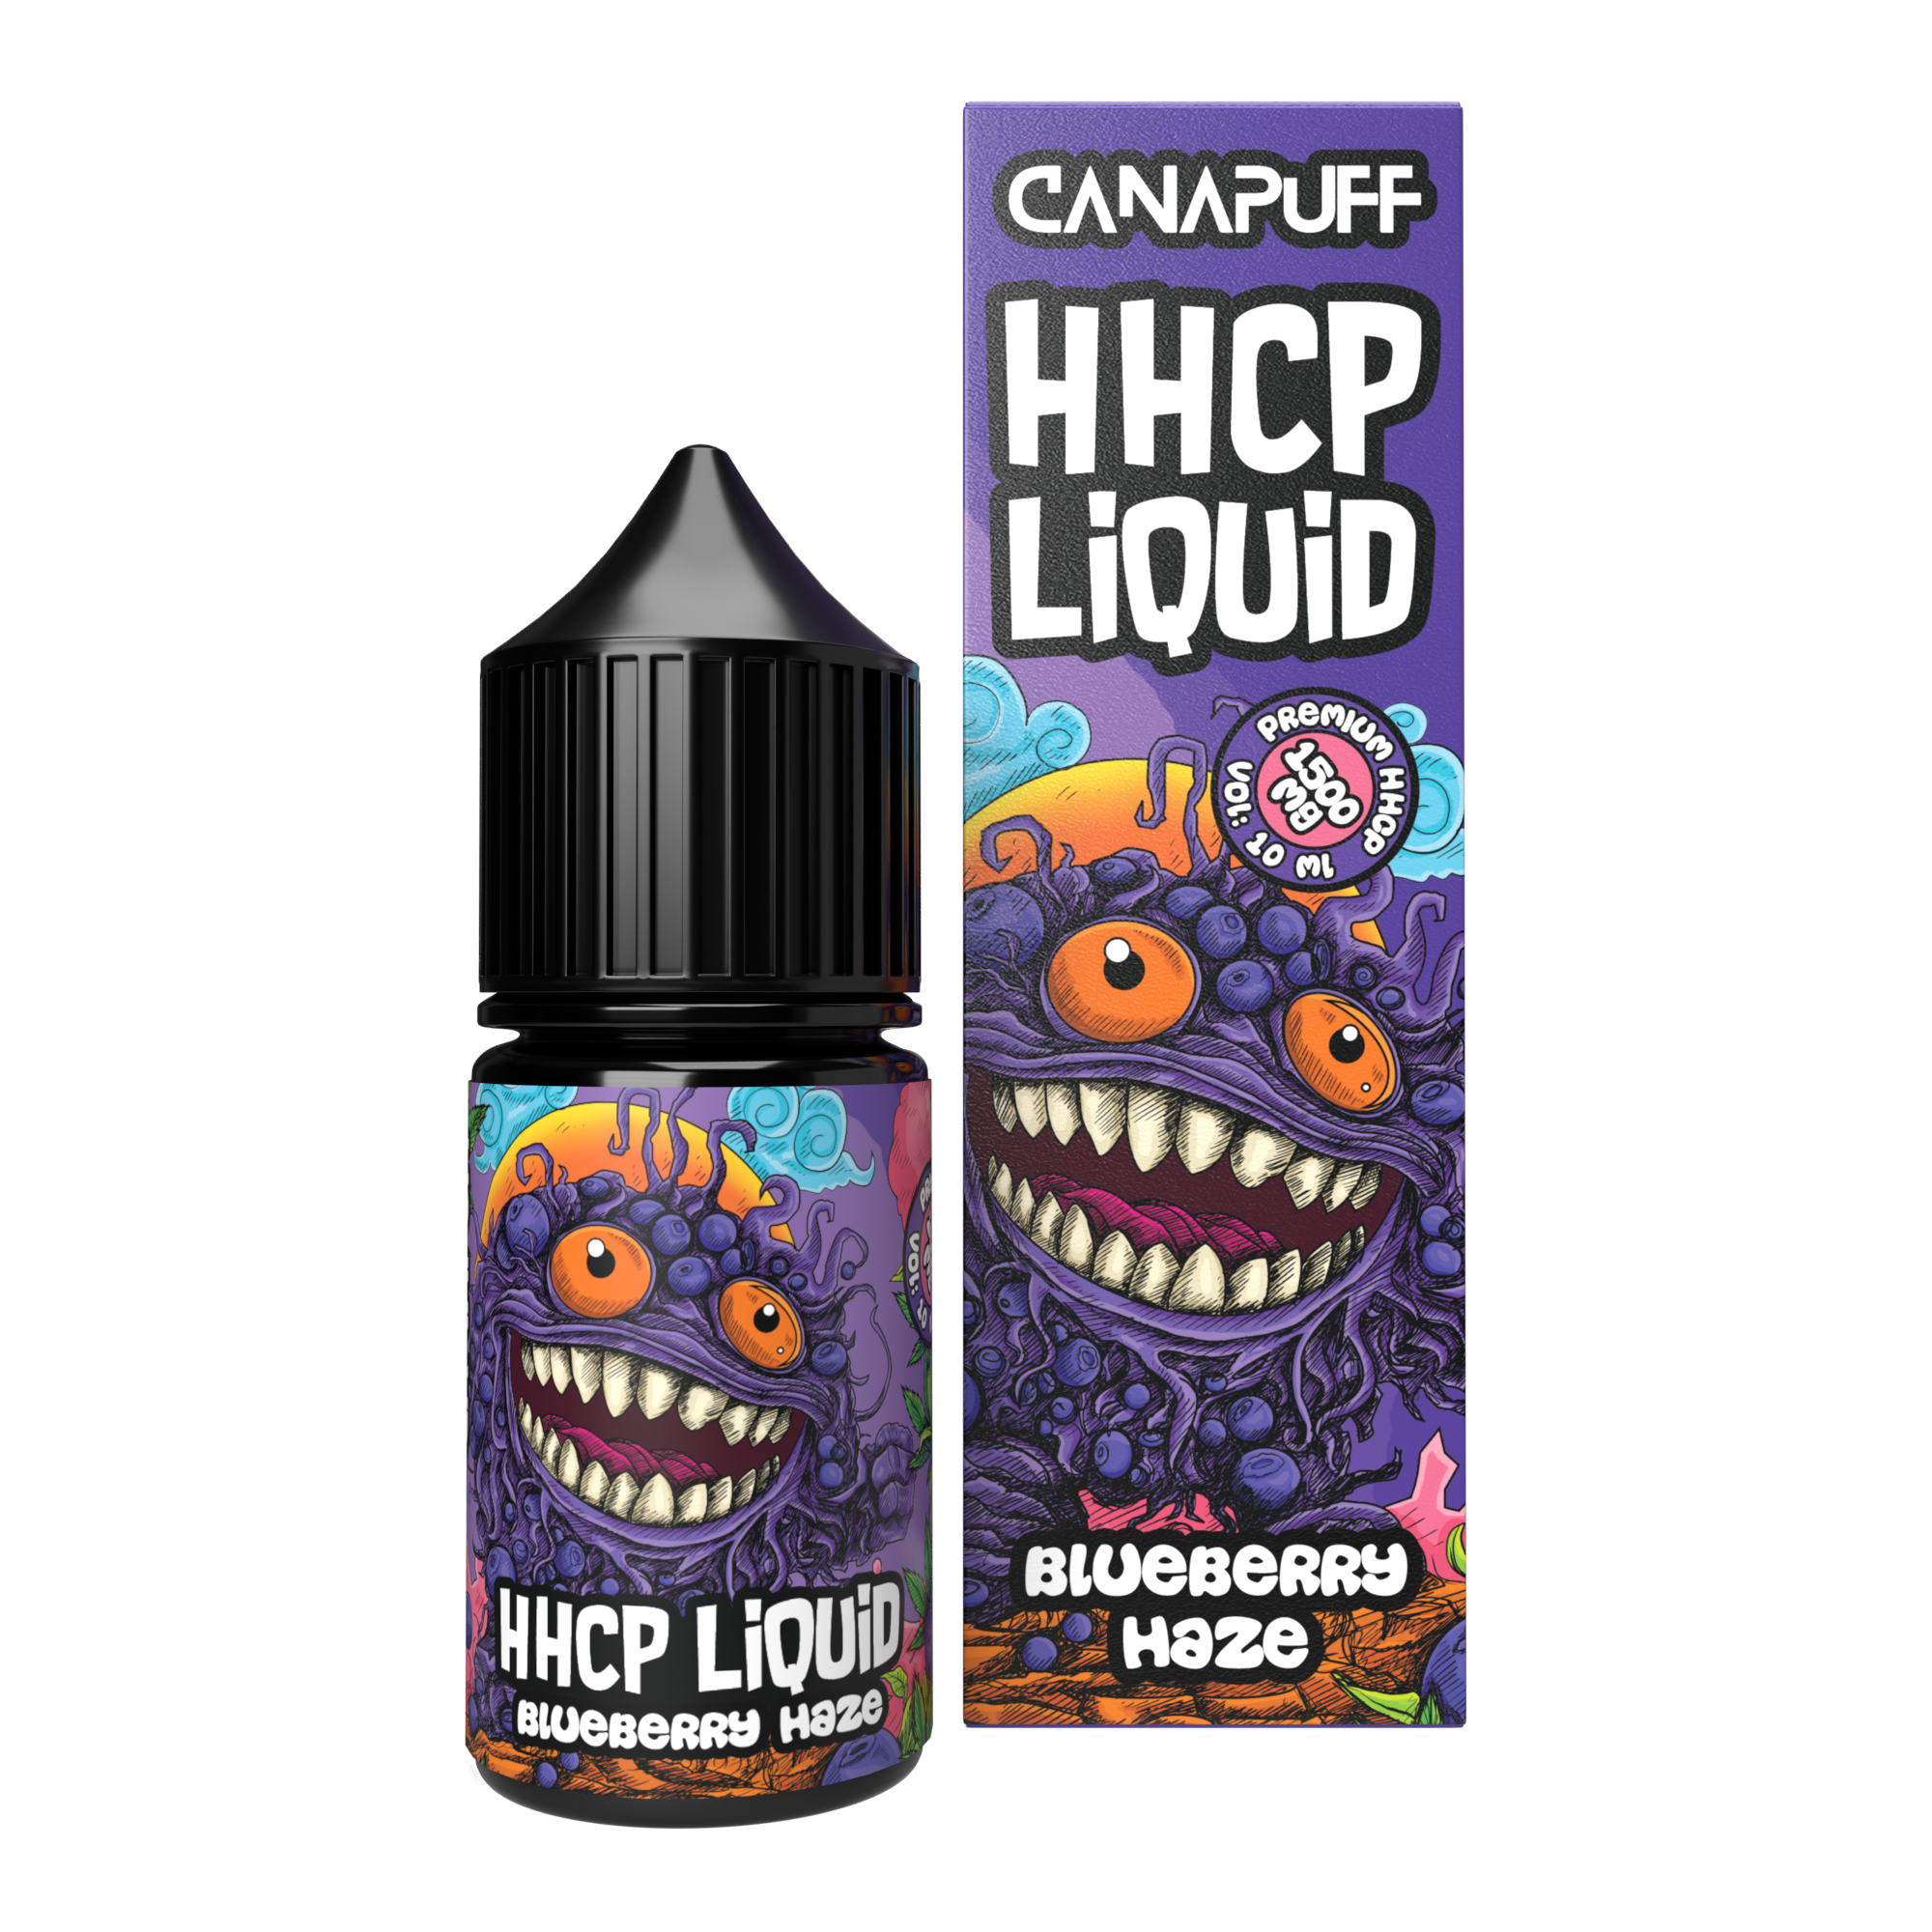 HHC-P Liquid 1.500mg - Blueberry Haze